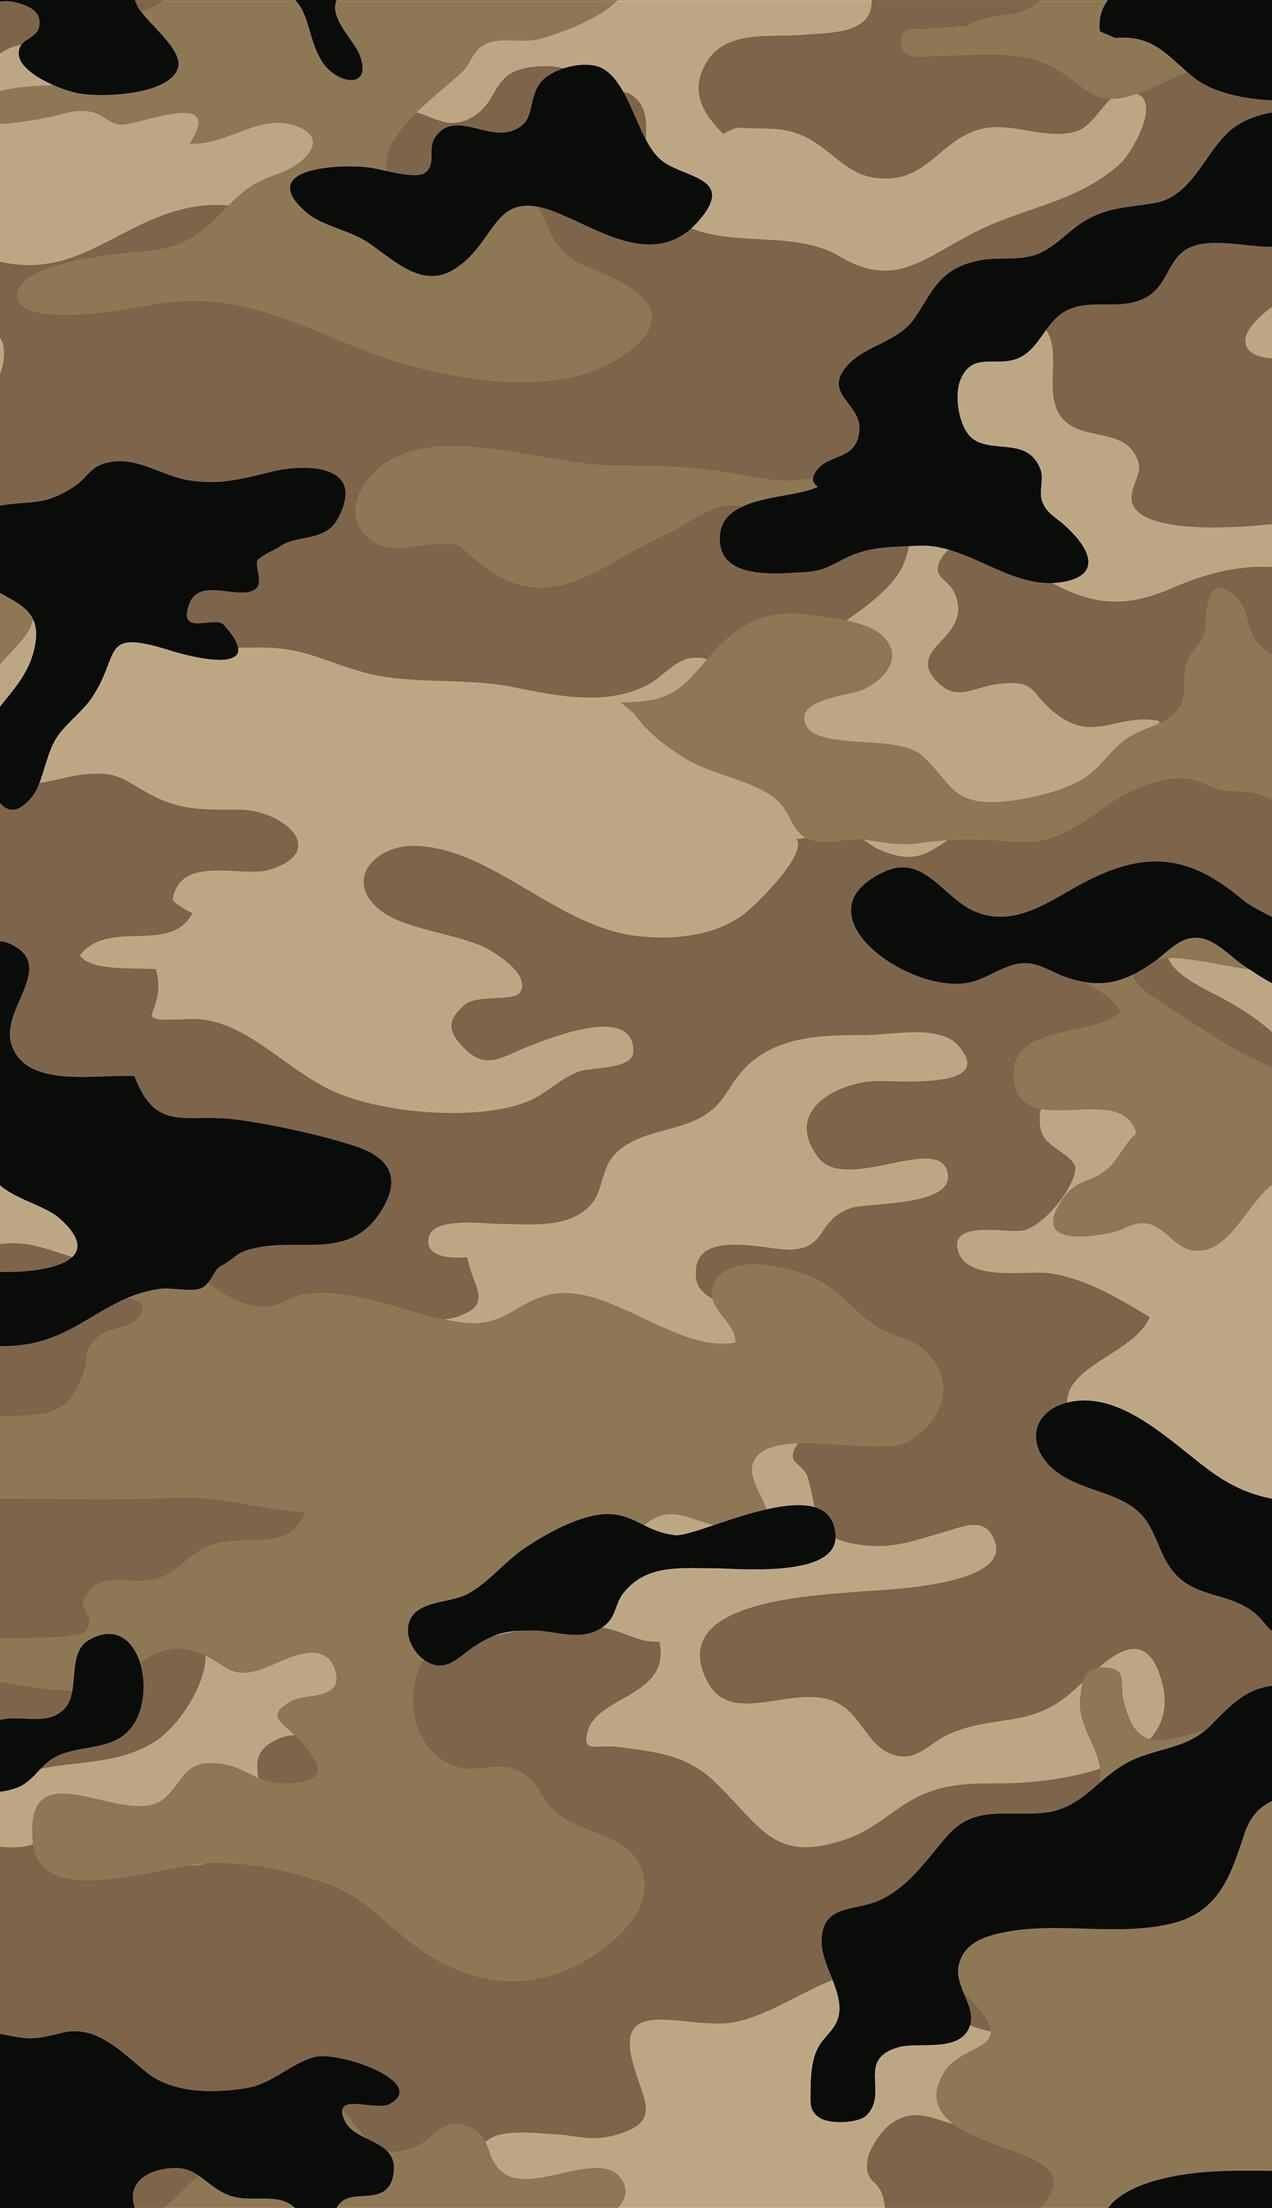 Explore Camo Wallpaper, Camouflage, and more